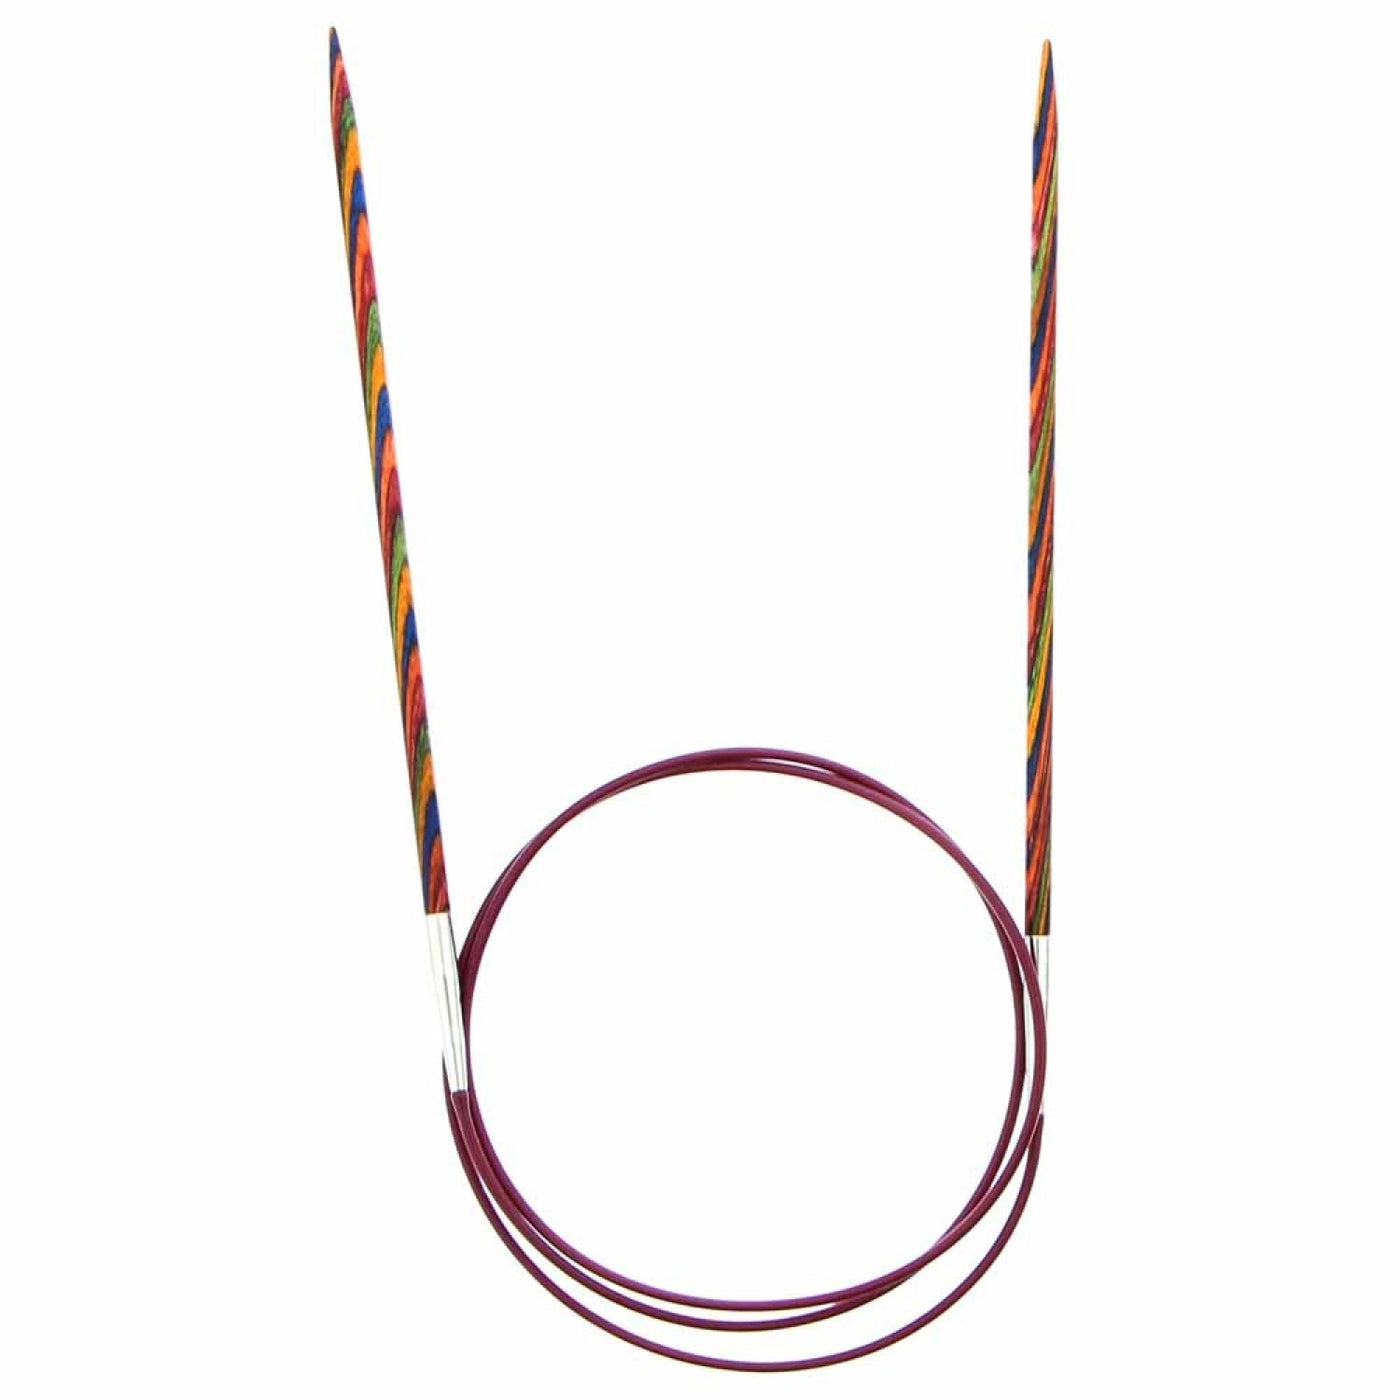 US 0 - 24” Knit Picks Knitting Needles - Multi Color